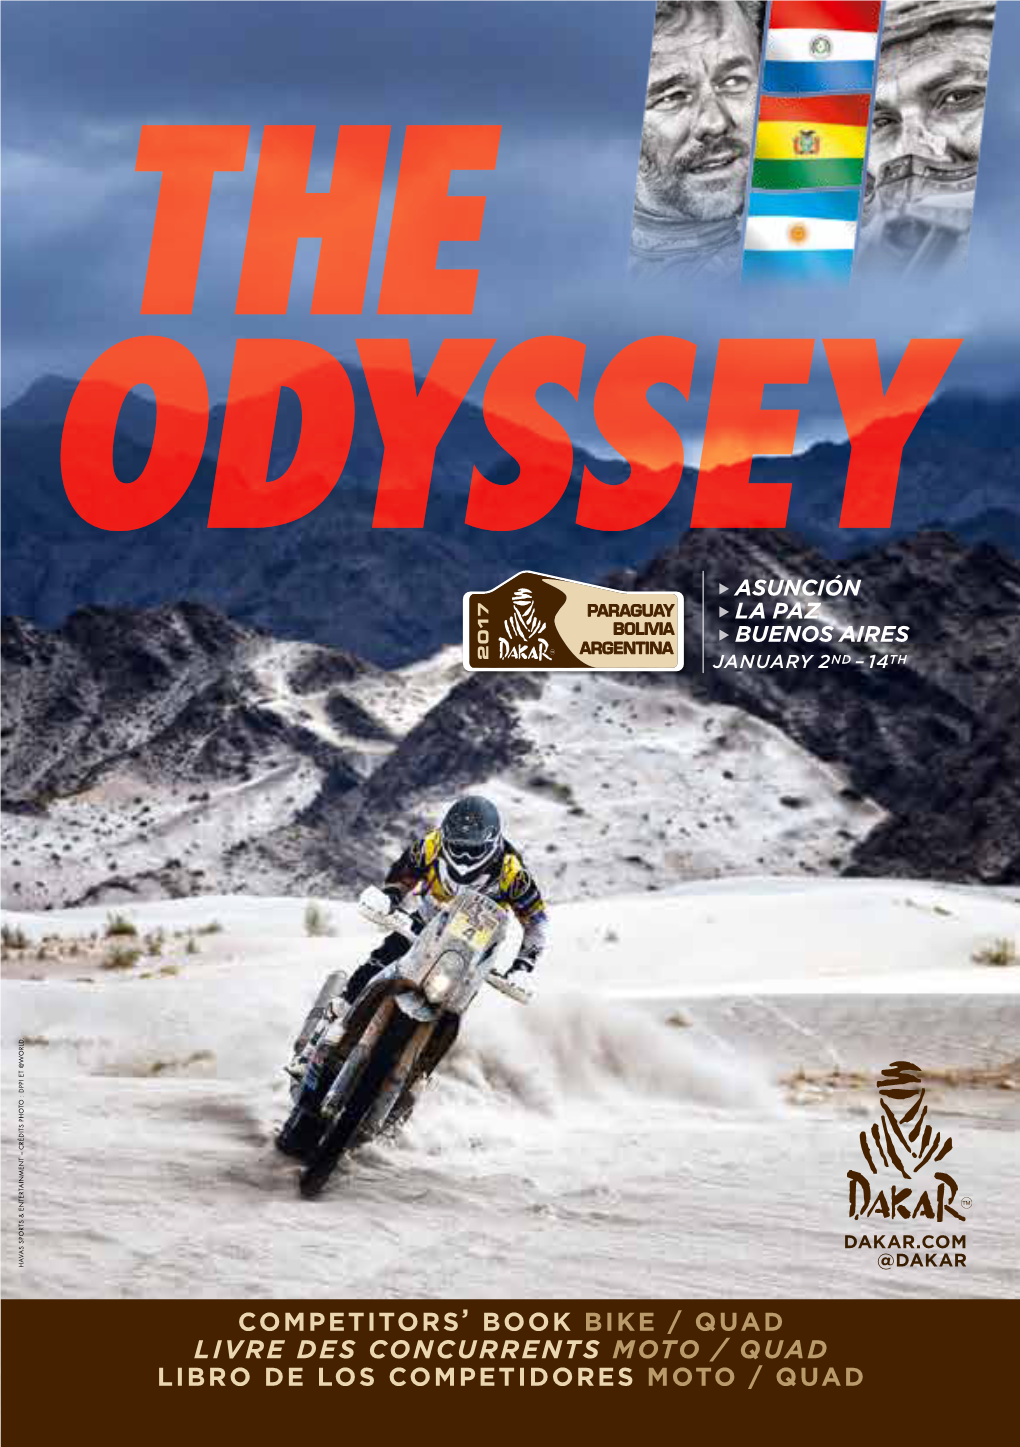 Russian Motocross Hero on the Dakar